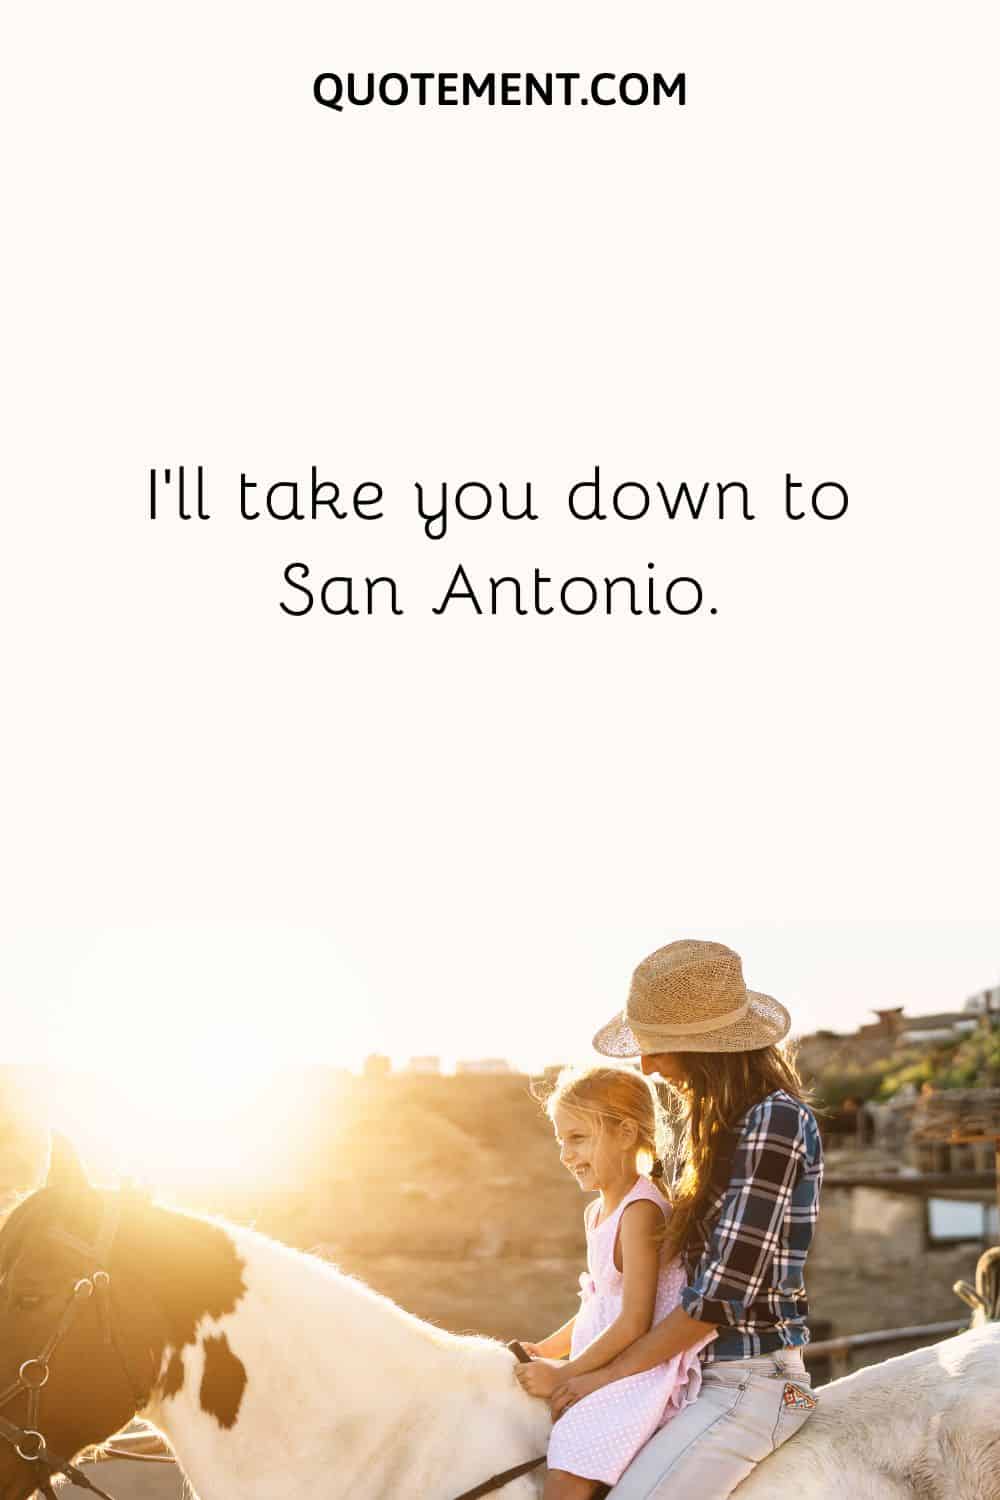 I’ll take you down to San Antonio.